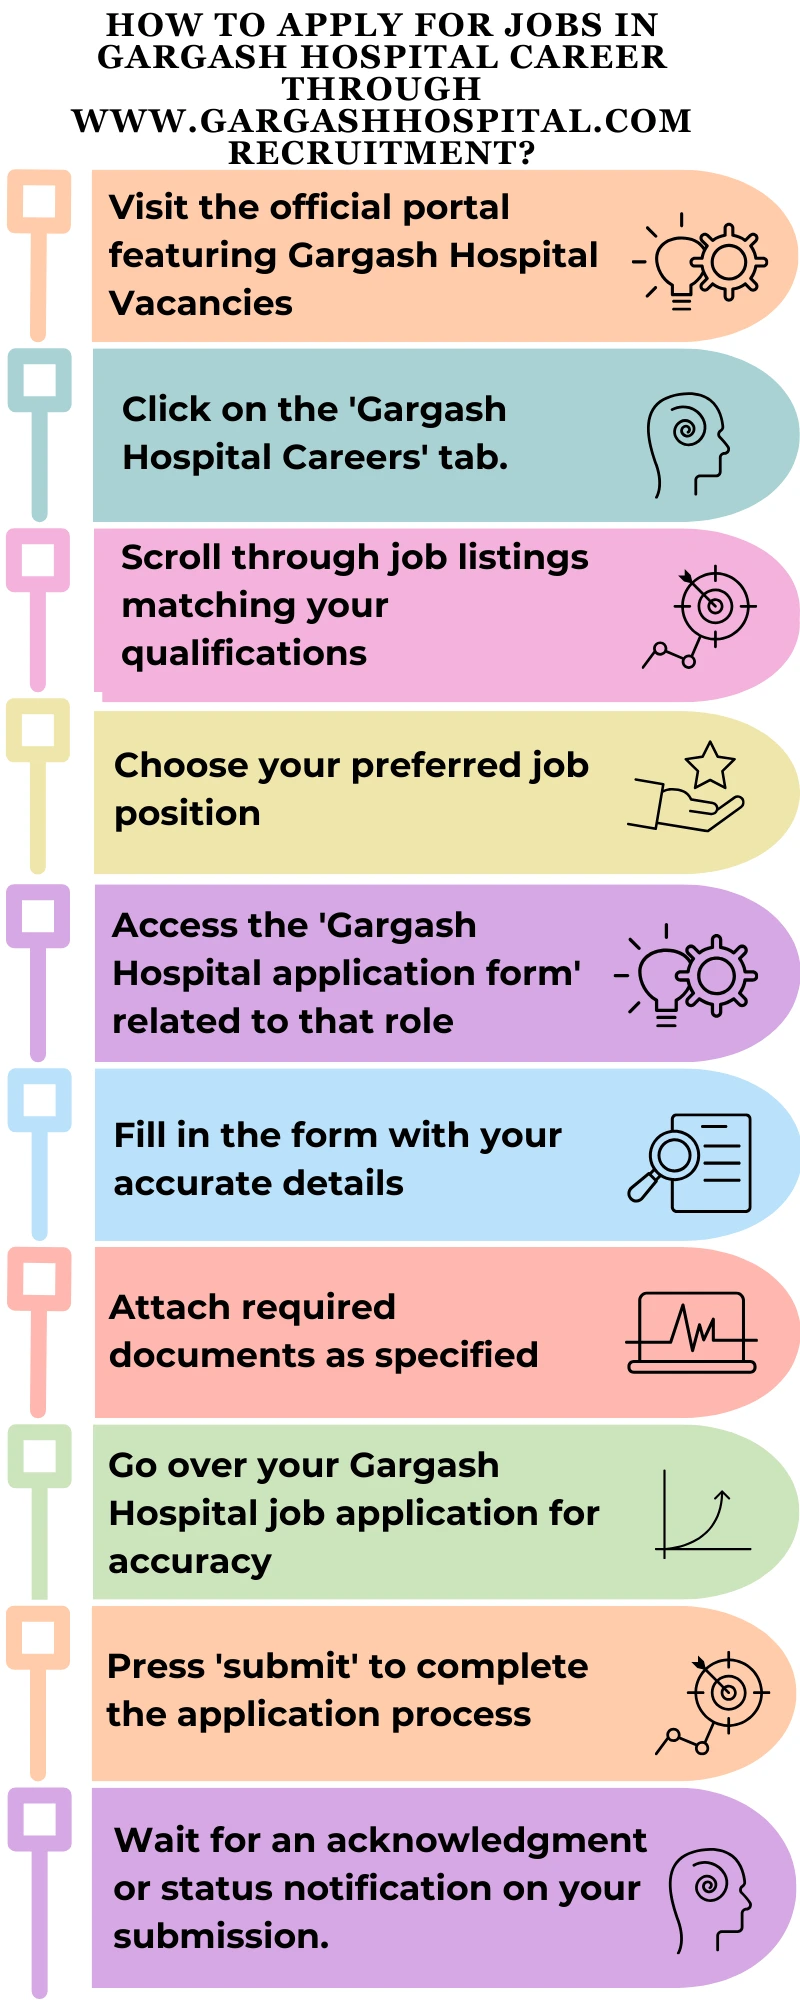 How to Apply for Jobs in Gargash Hospital Career through www.gargashhospital.com recruitment?